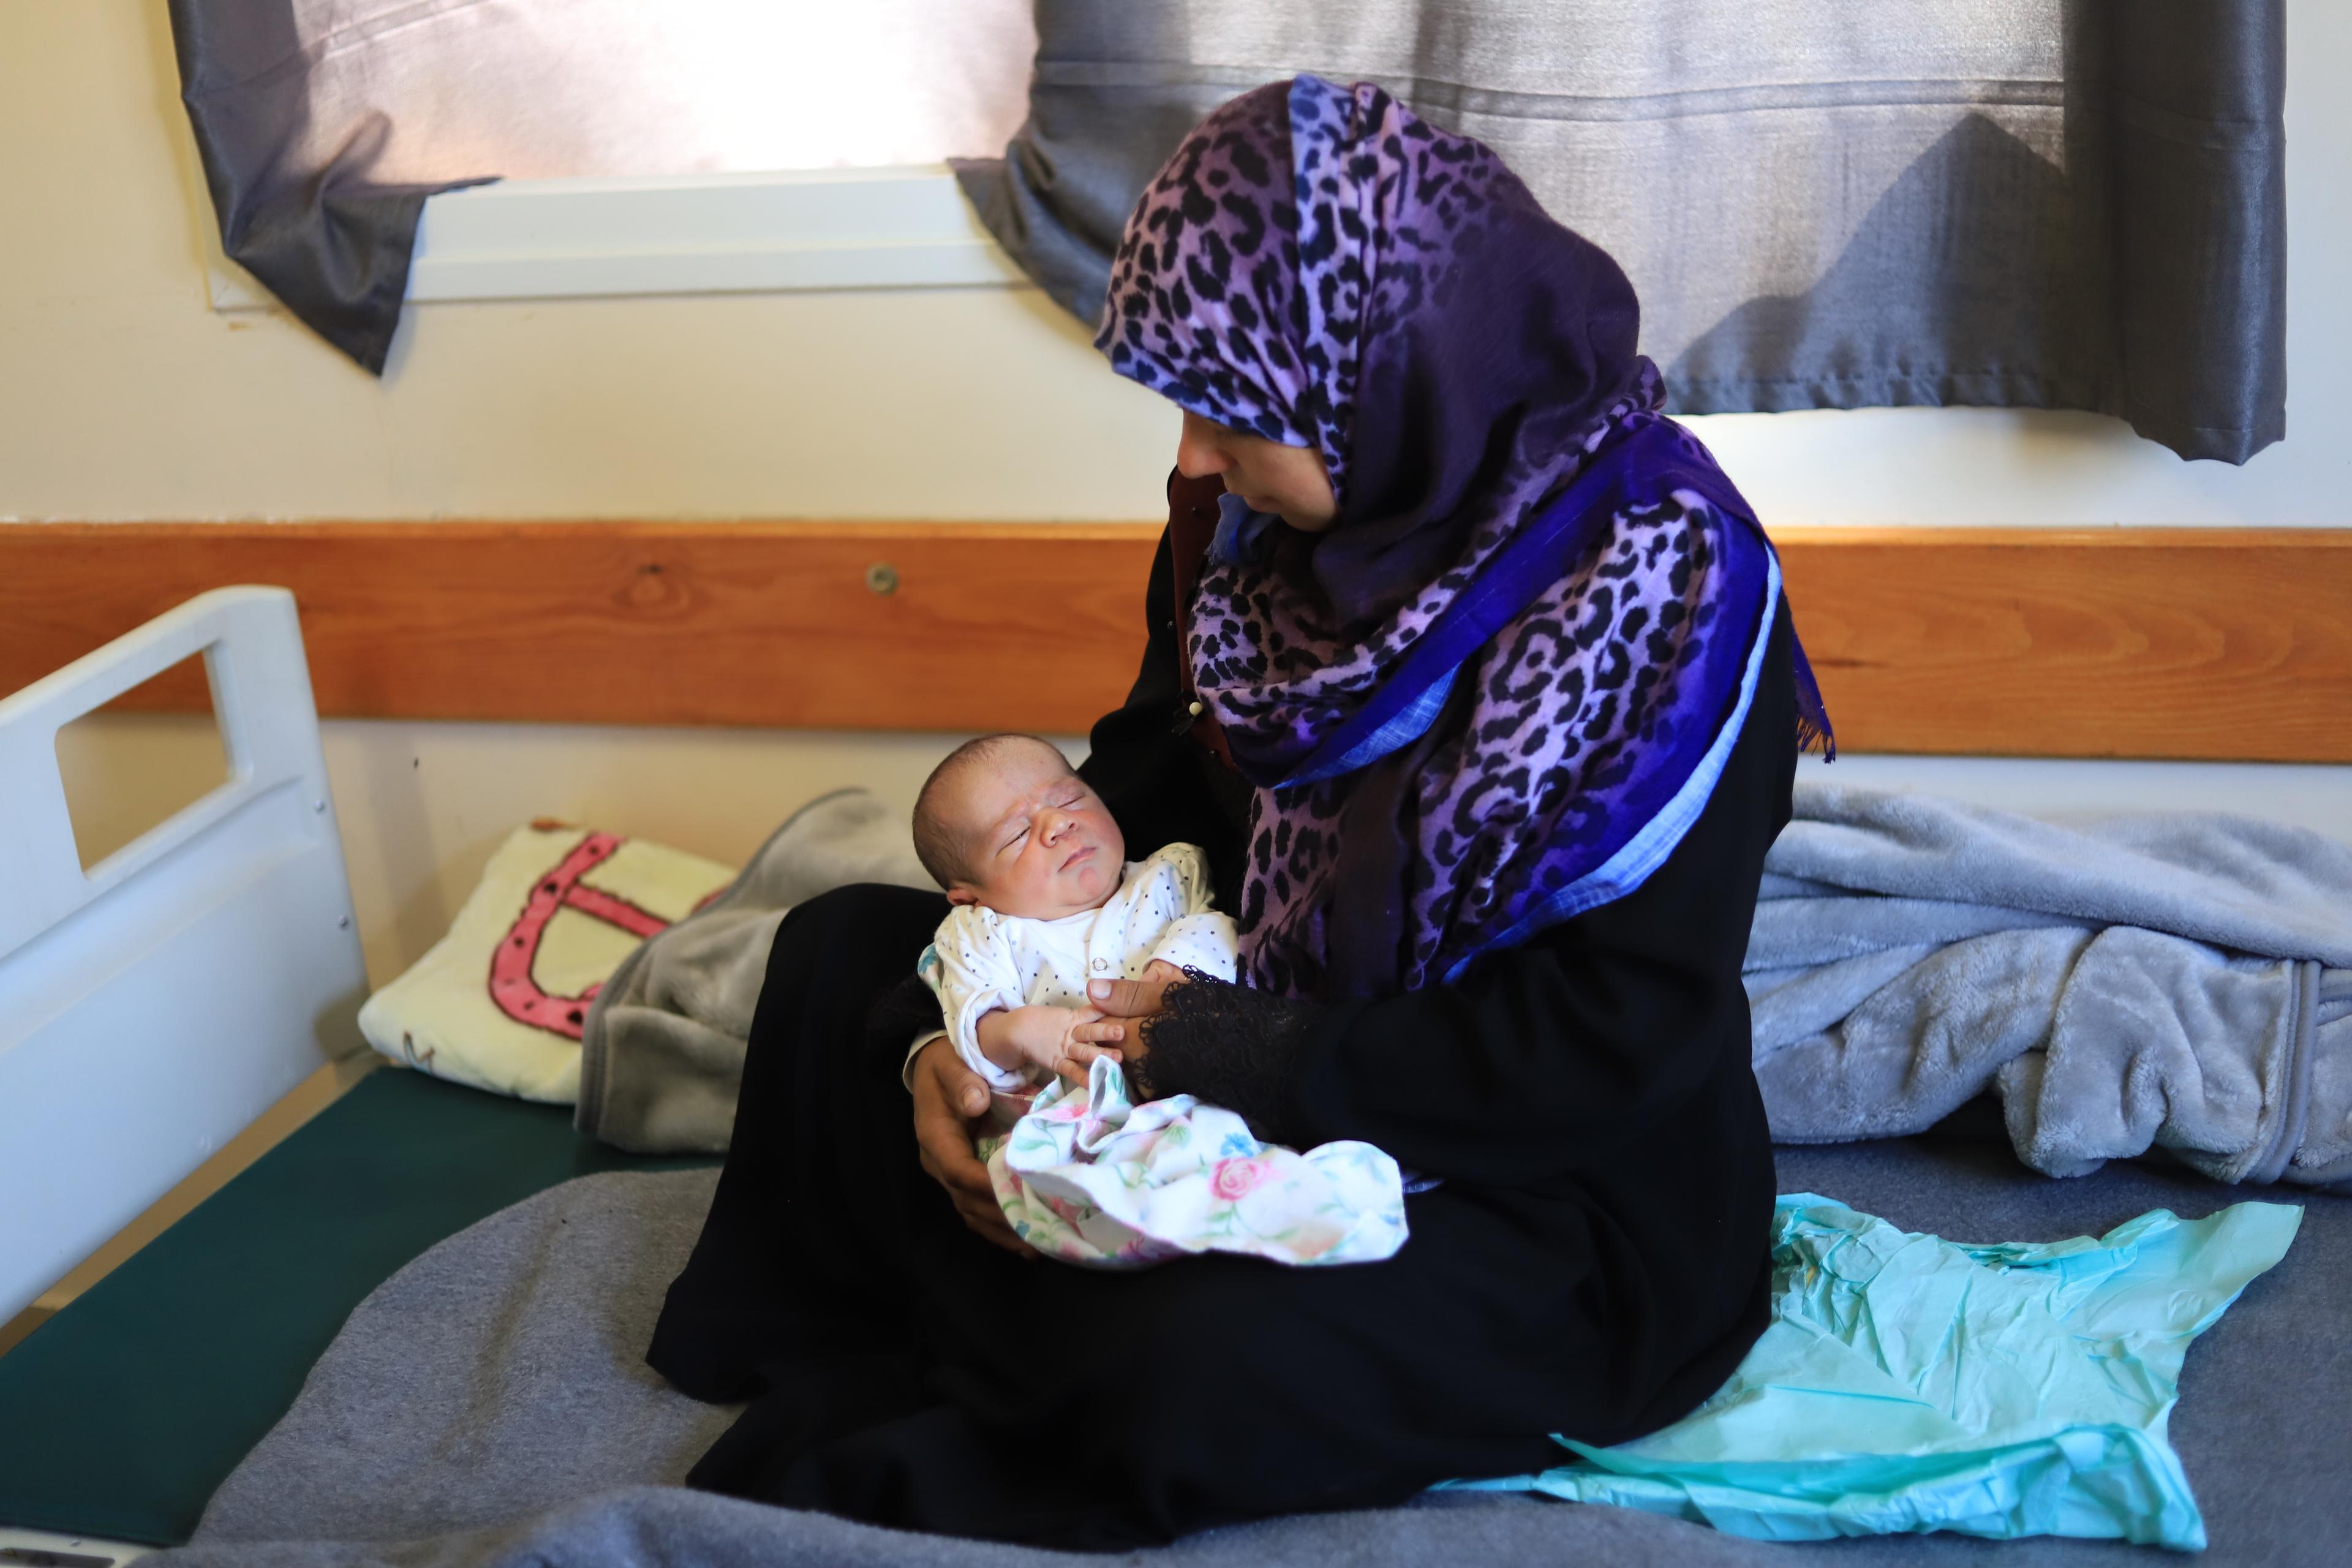 Khadra, a accouché à l'hôpital Nasser, dans le sud de Gaza. © Mariam Abu Dagga/MSF 